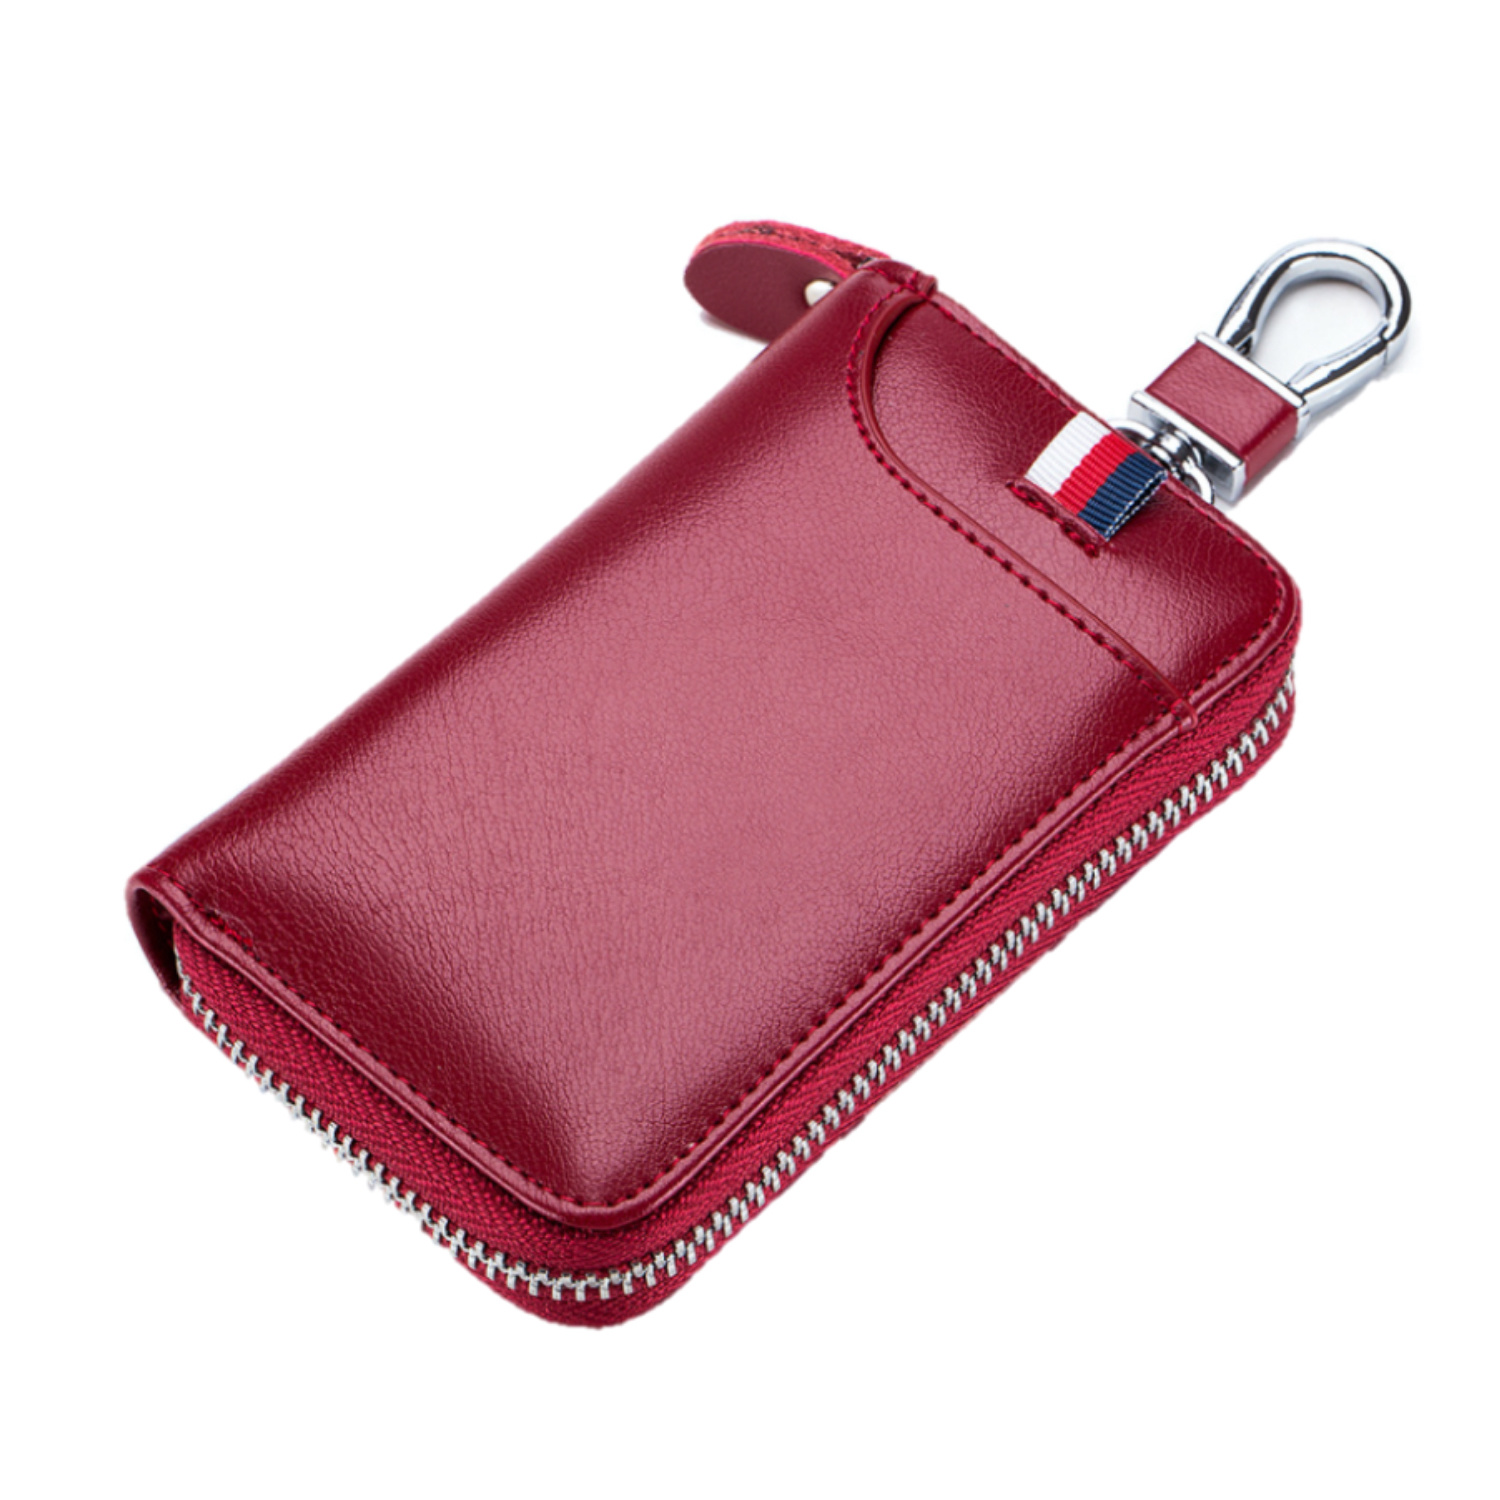 Leather Key Case, 6 Key Hooks, Card Holder, Bank Notes Wallet, Car Key Pocket, Multifunctional Key Organizer - Red-8